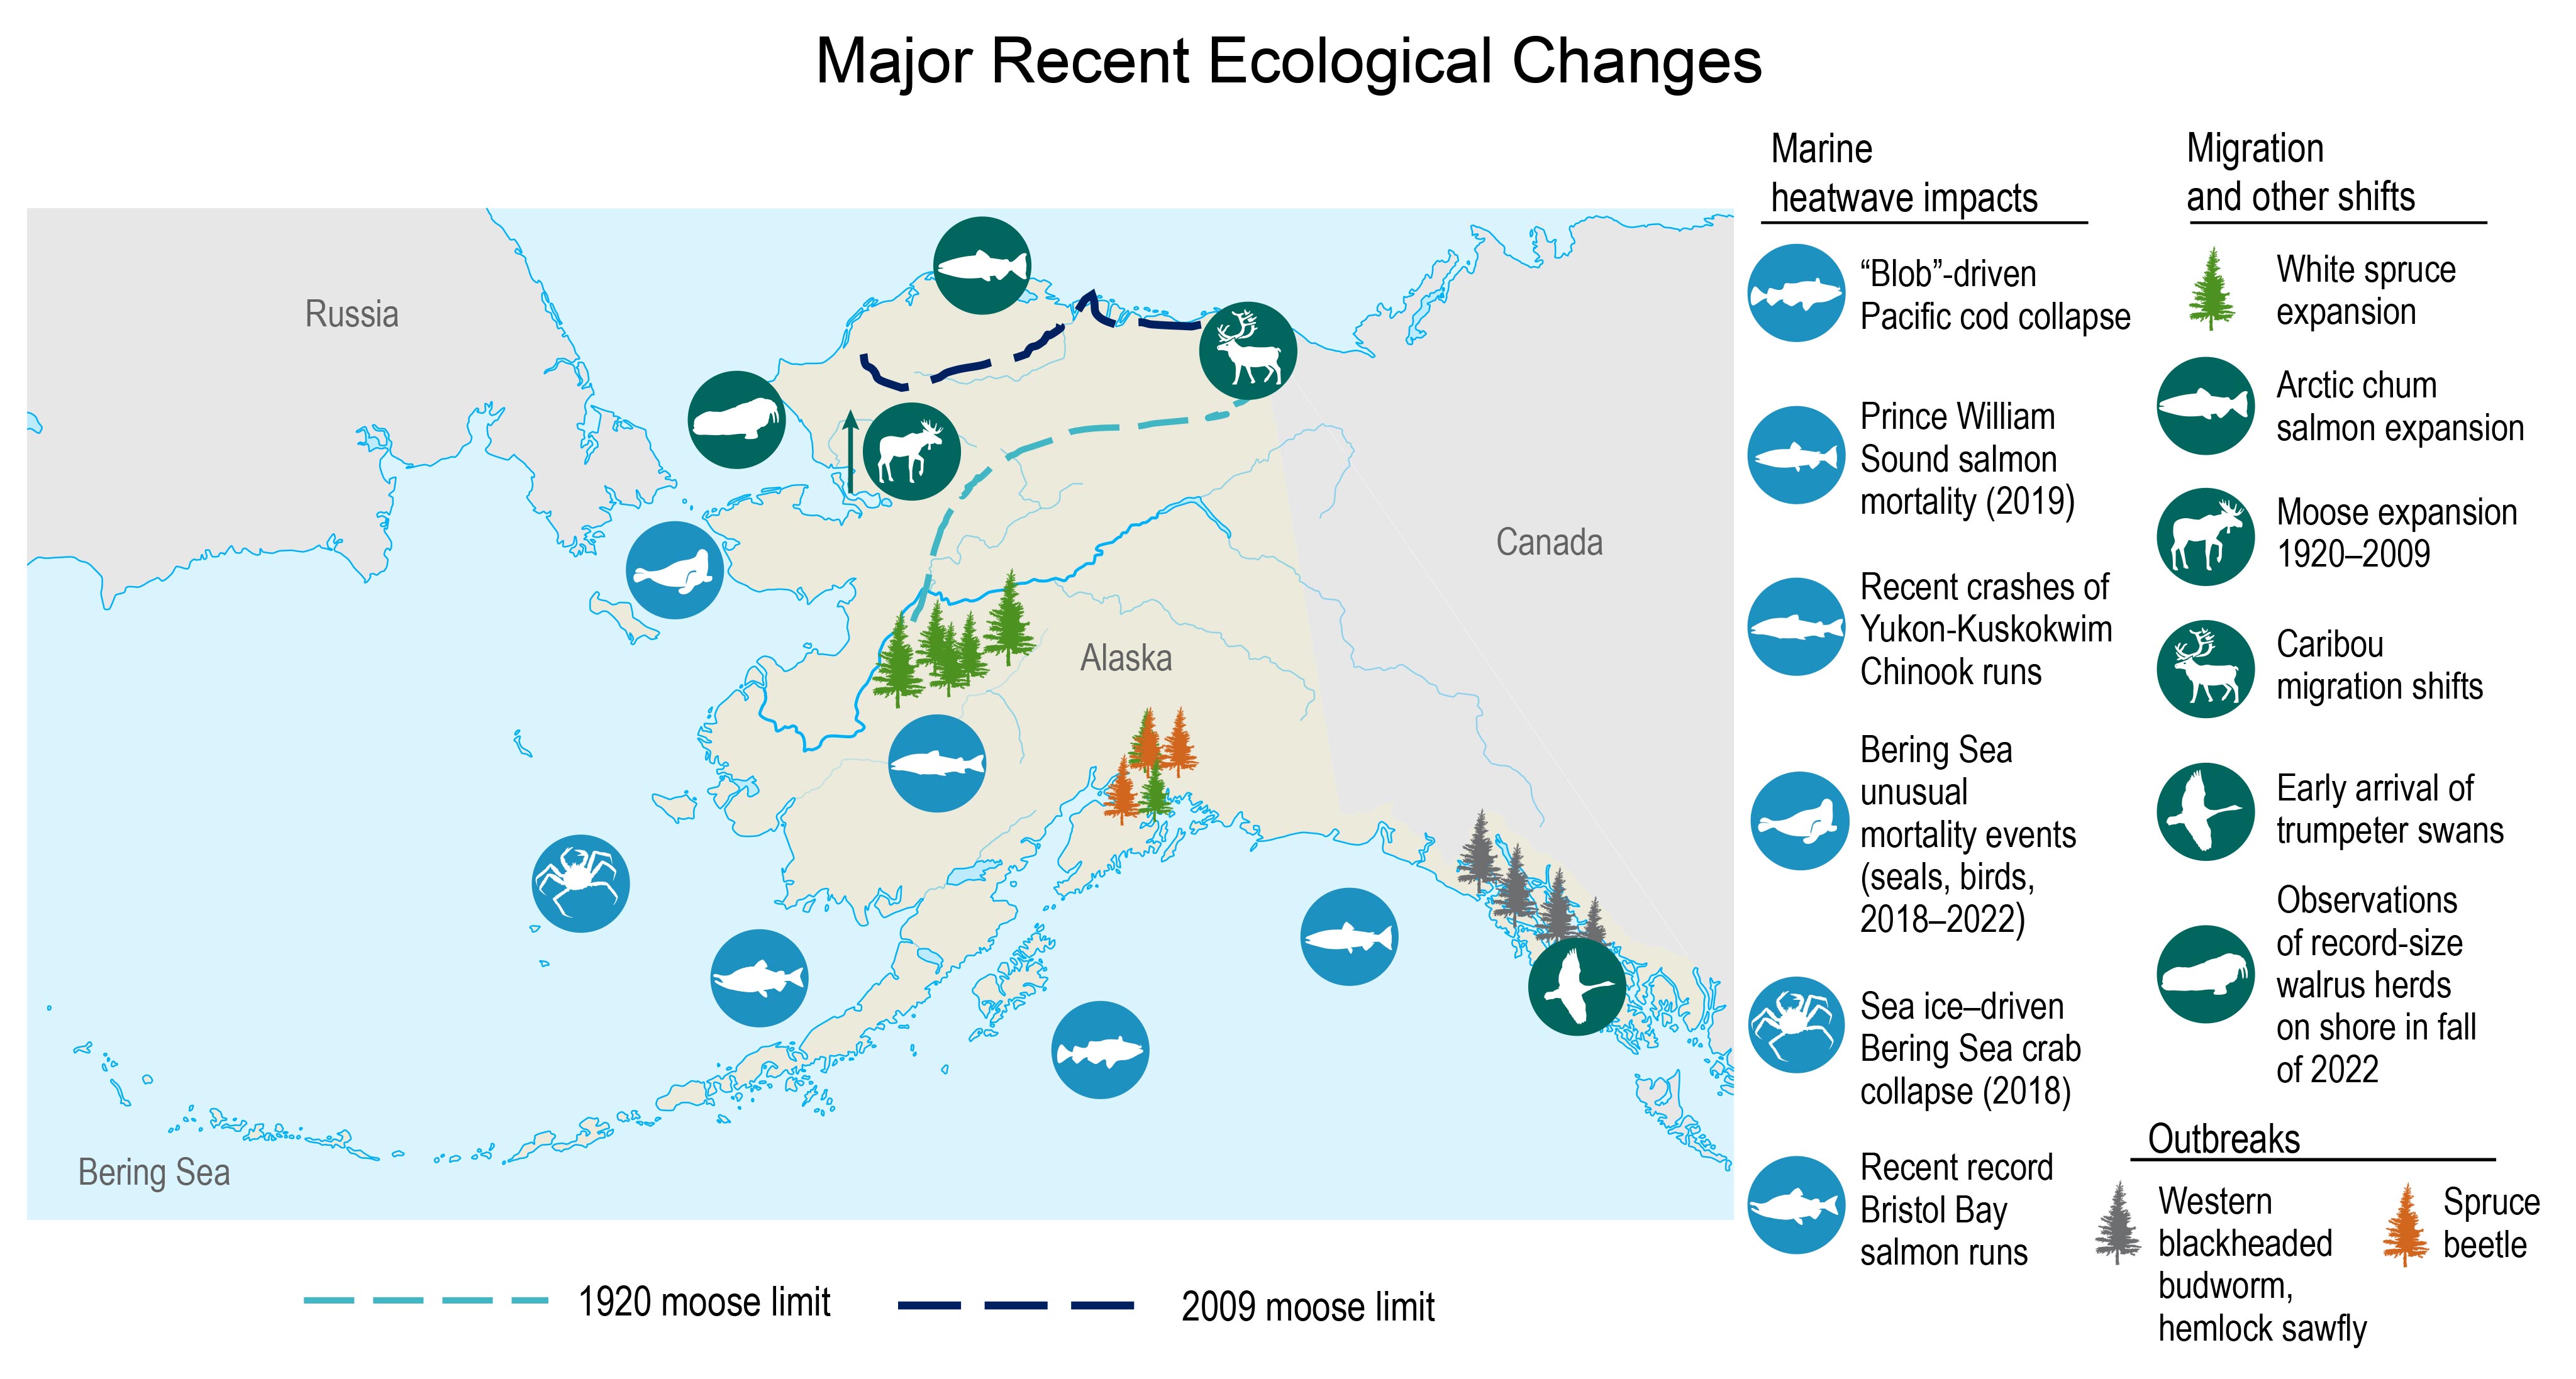 Major Recent Ecological Changes